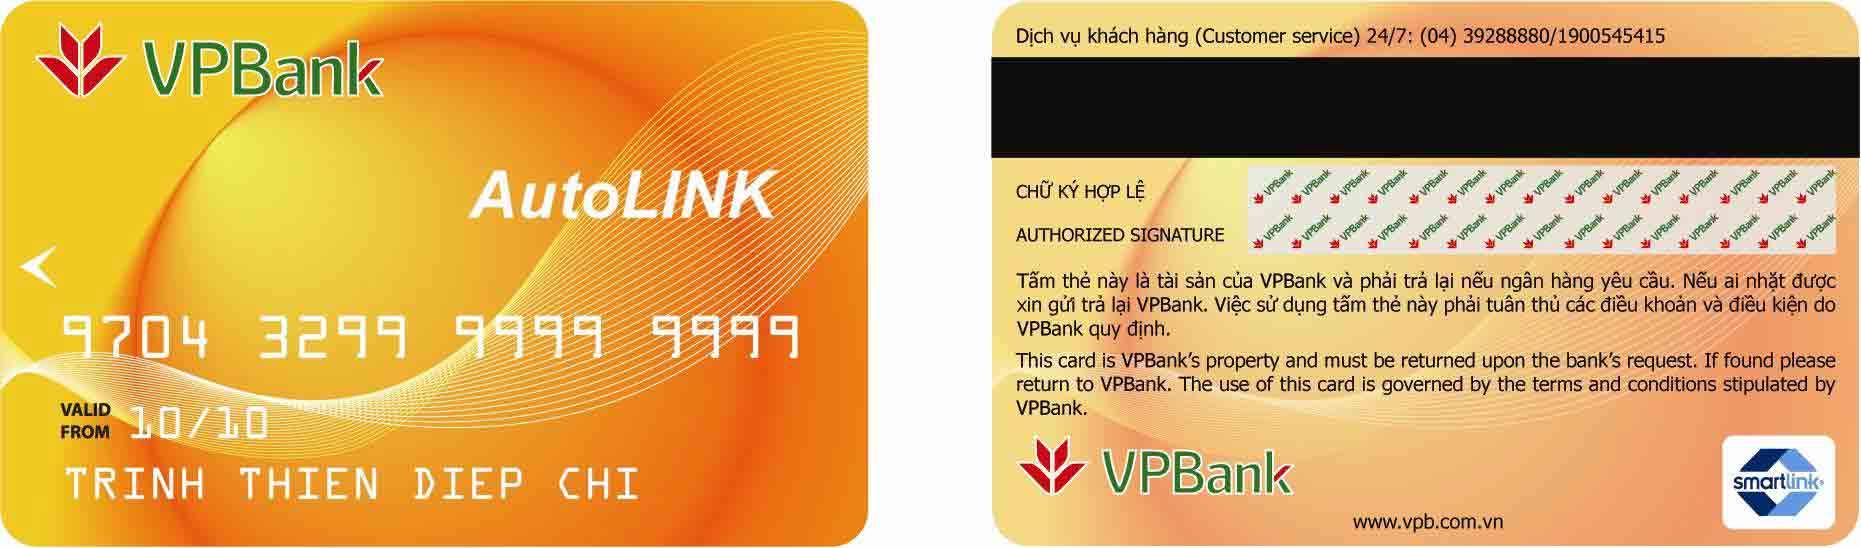 Thẻ VPBank Autolink